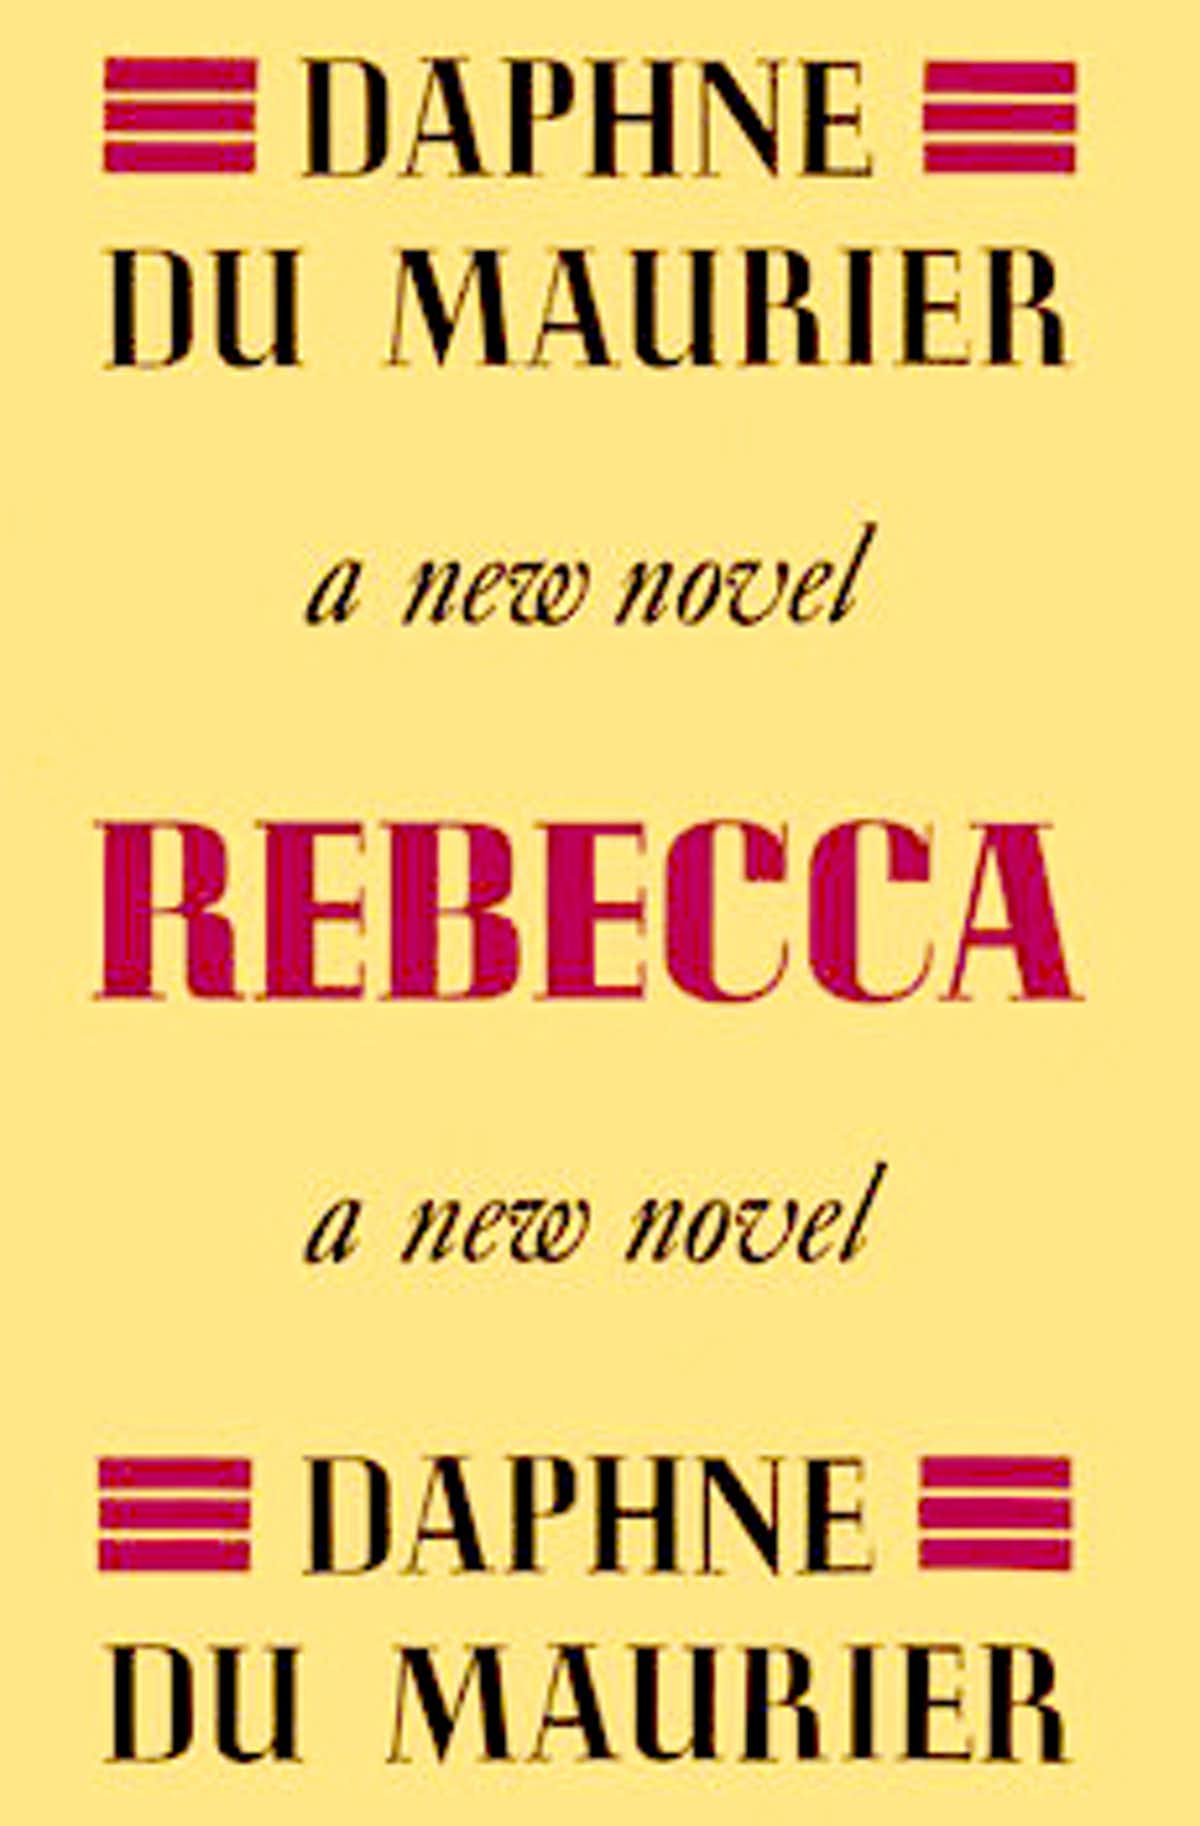 Daphne du Maurier’s classic is spookier than the recent Netflix adaptation